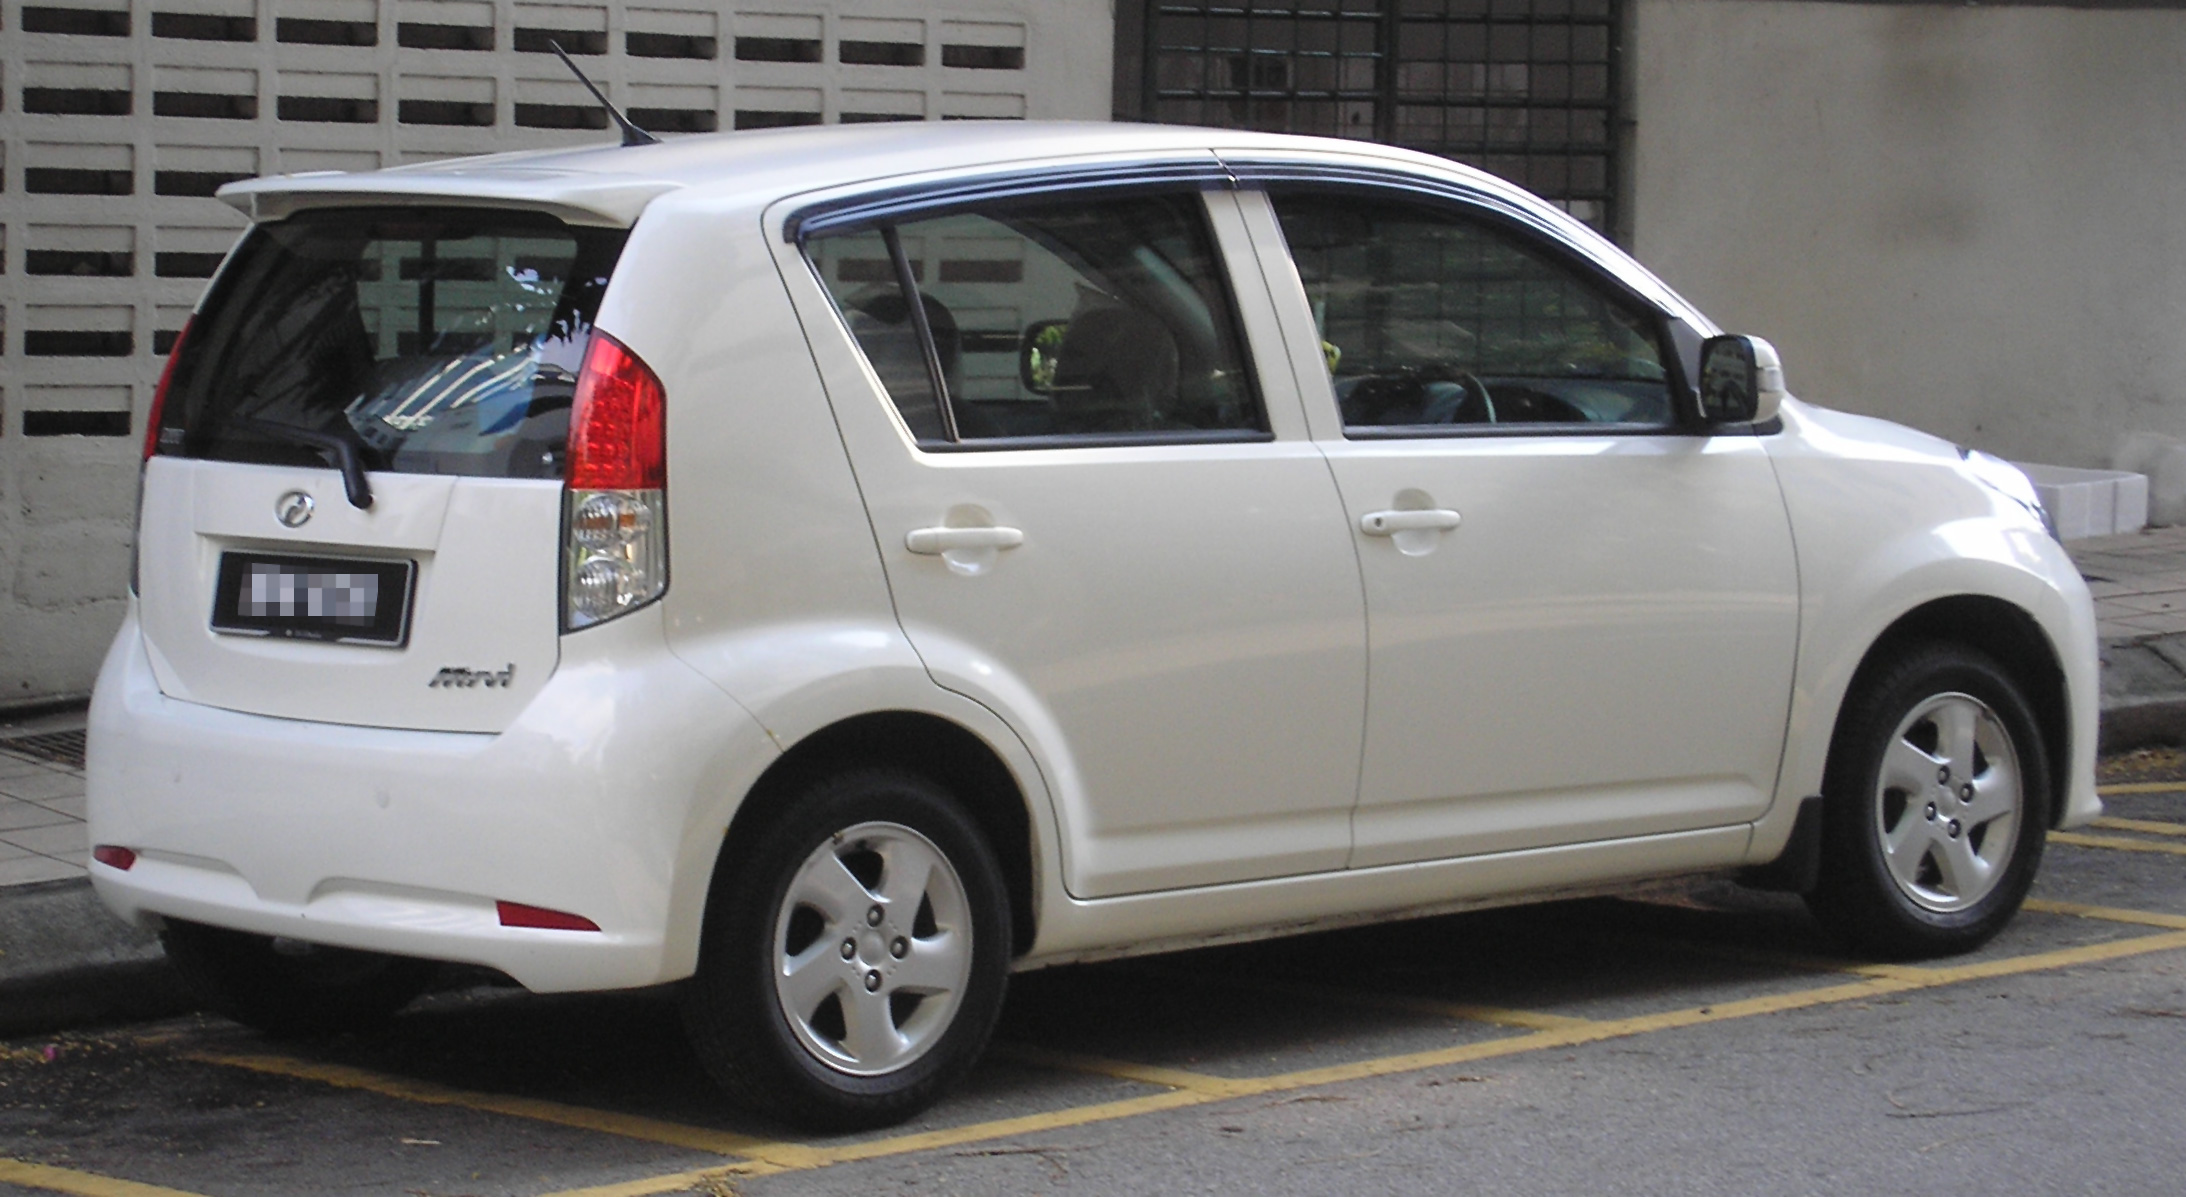 File:Perodua MyVi (rear), Kuala Lumpur.jpg - Wikimedia Commons